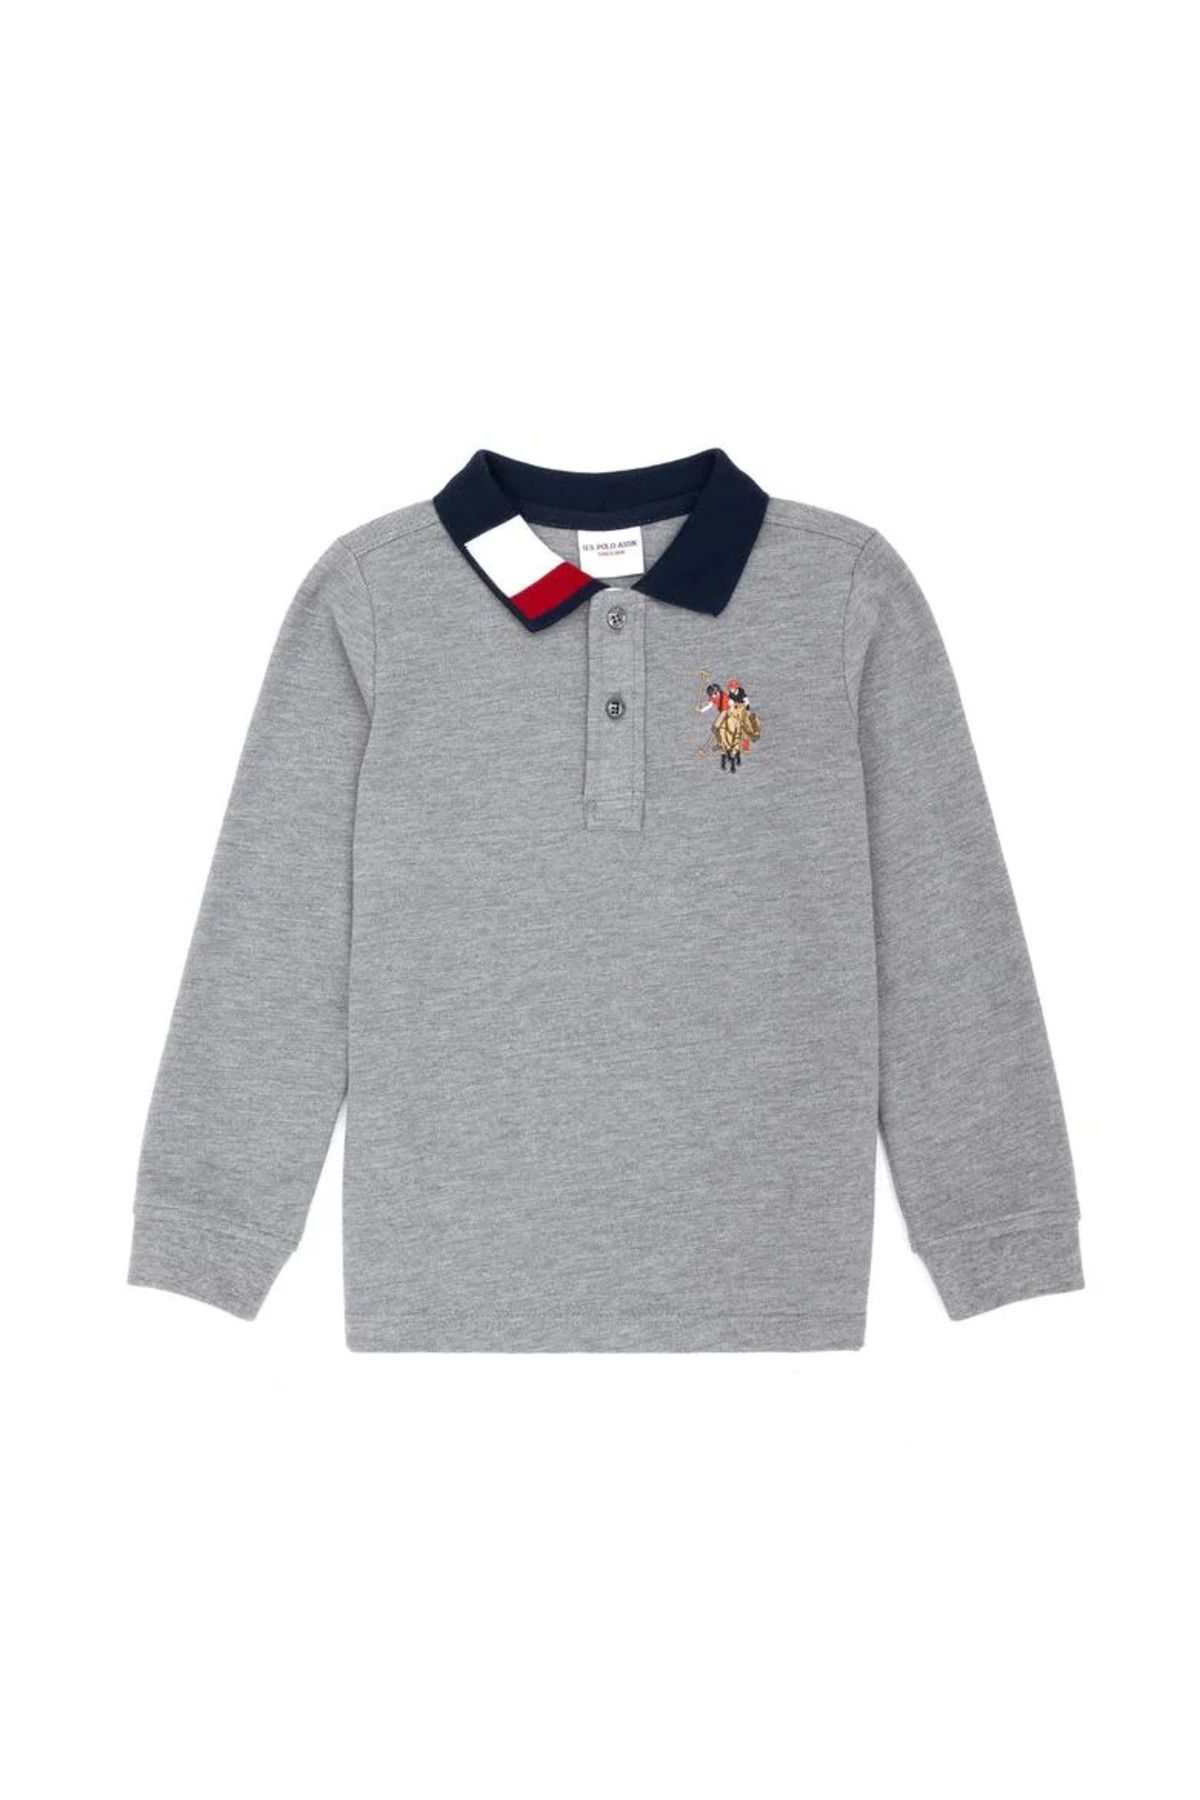 U.S. Polo Assn. Erkek Çocuk Gri Basic Polo Yaka Sweatshirt